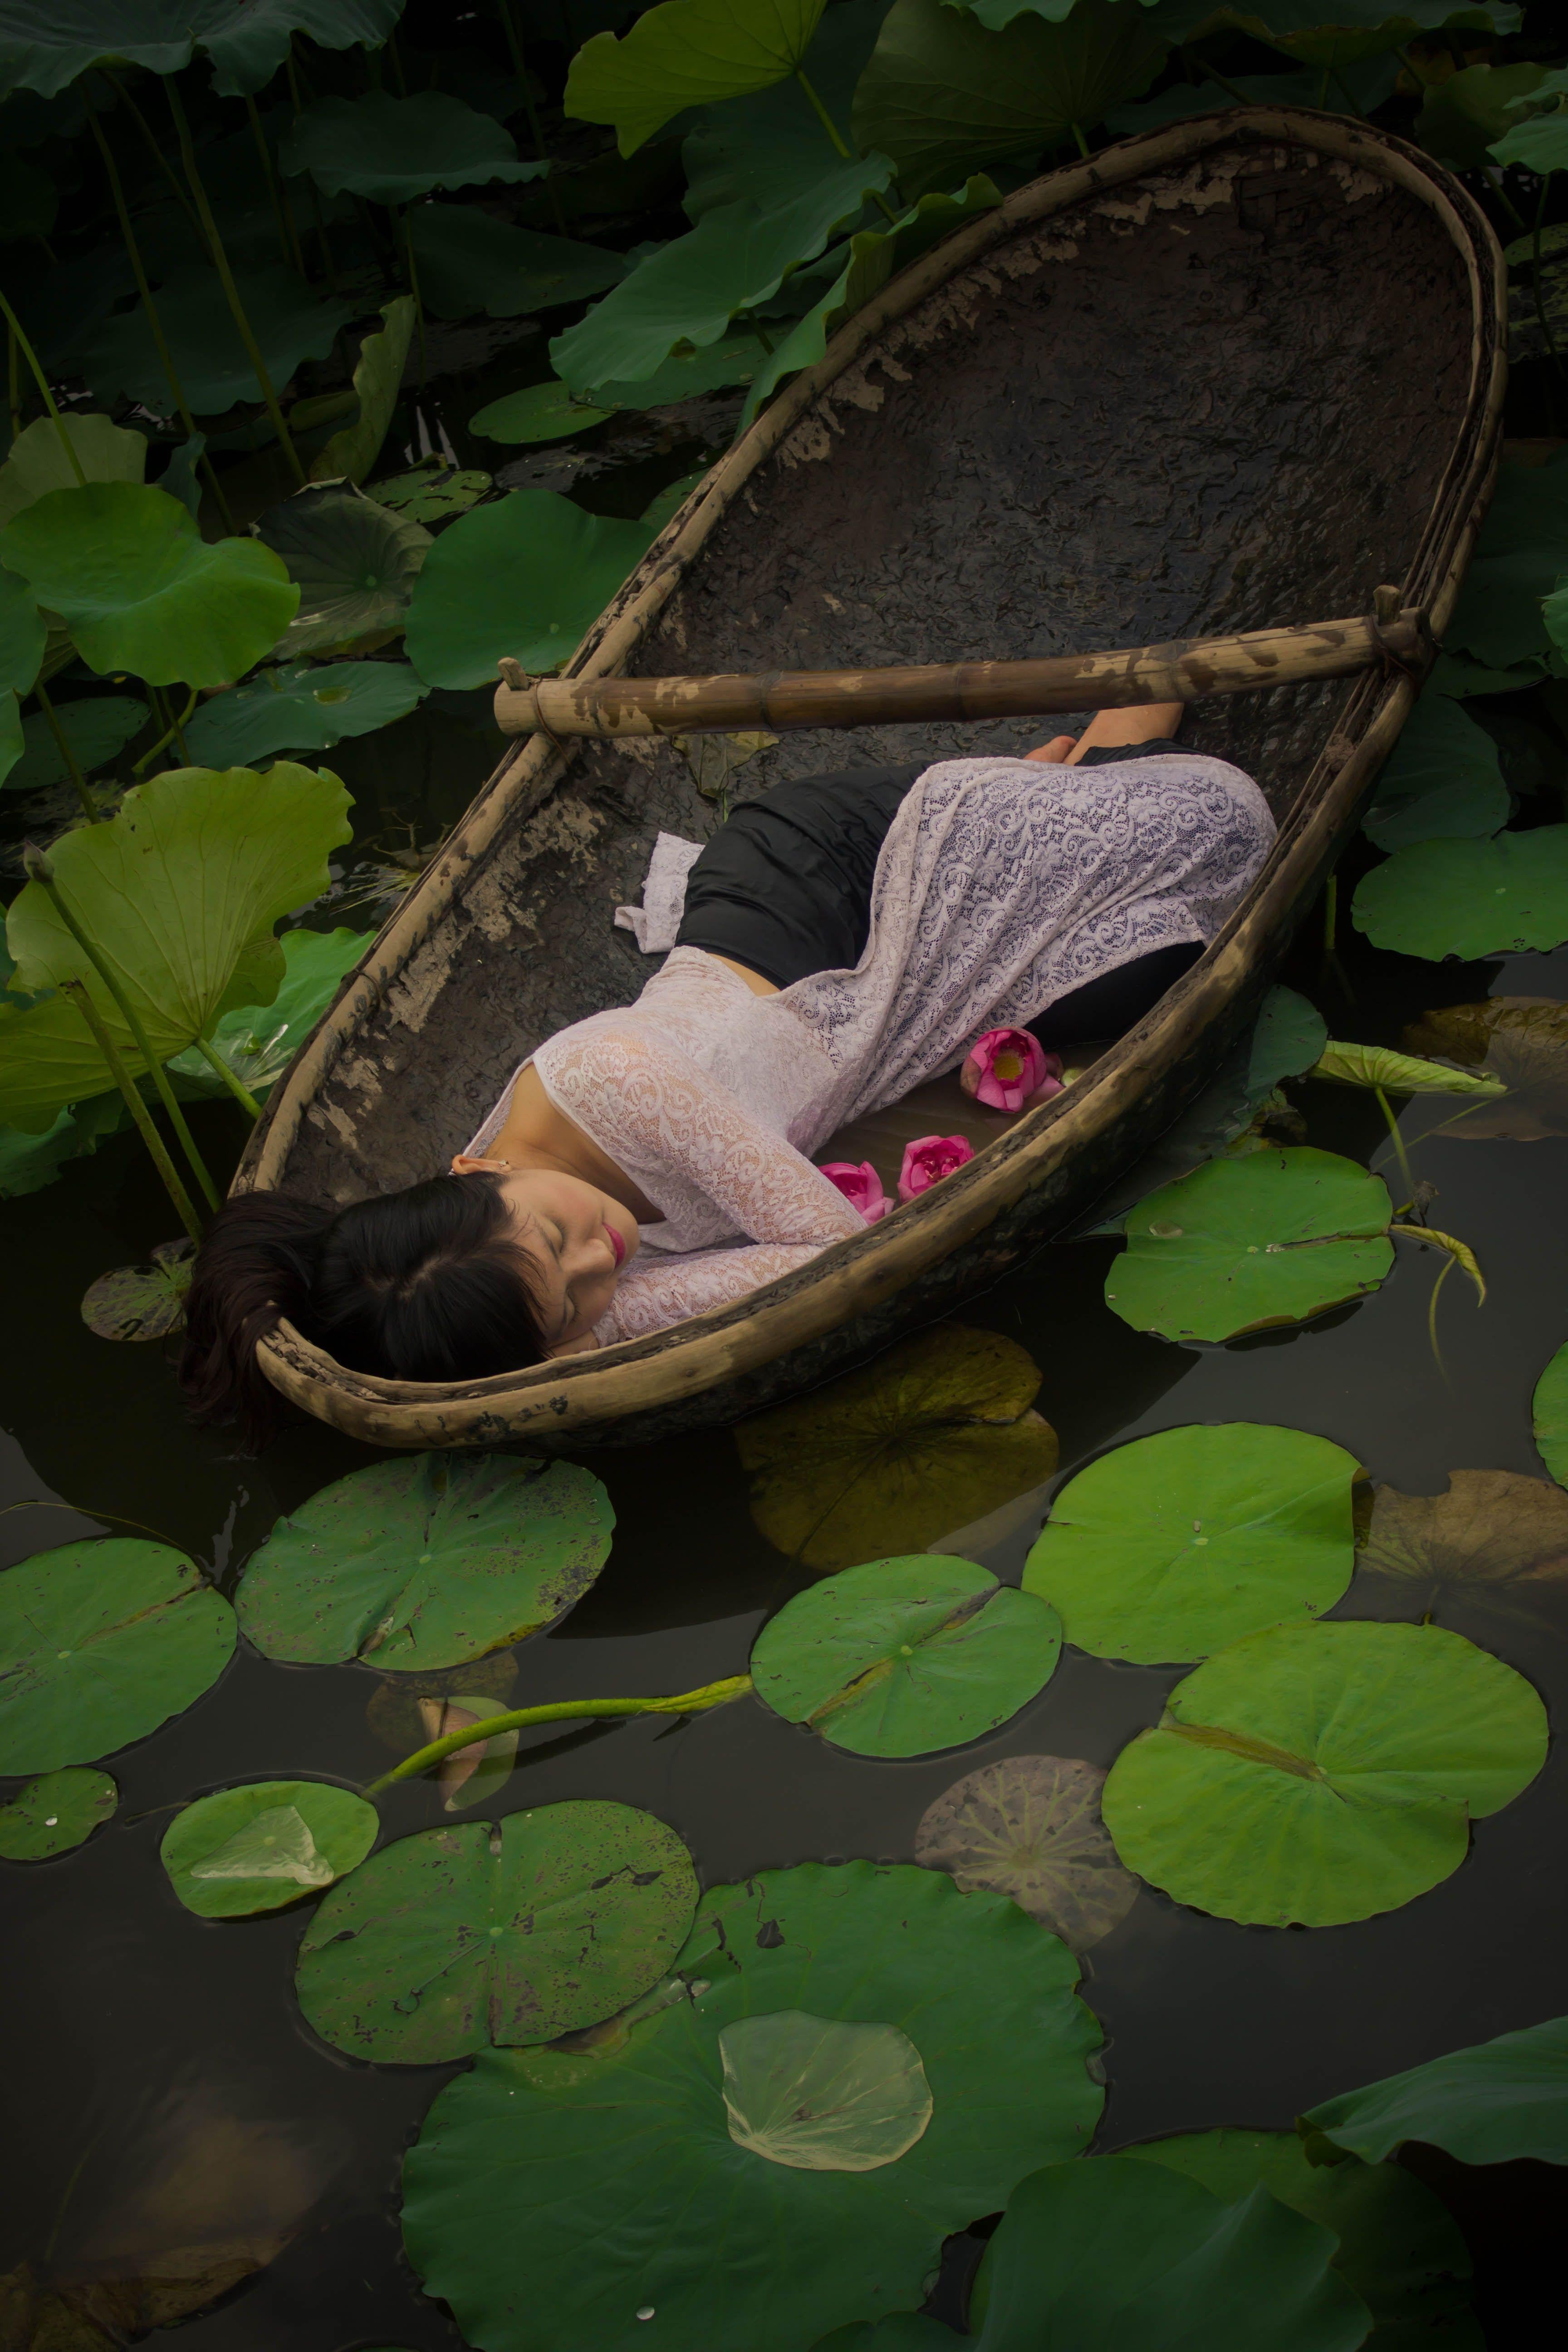 Viet Ha Tran Color Photograph - The Lotus Lake V, Photograph, C-Type